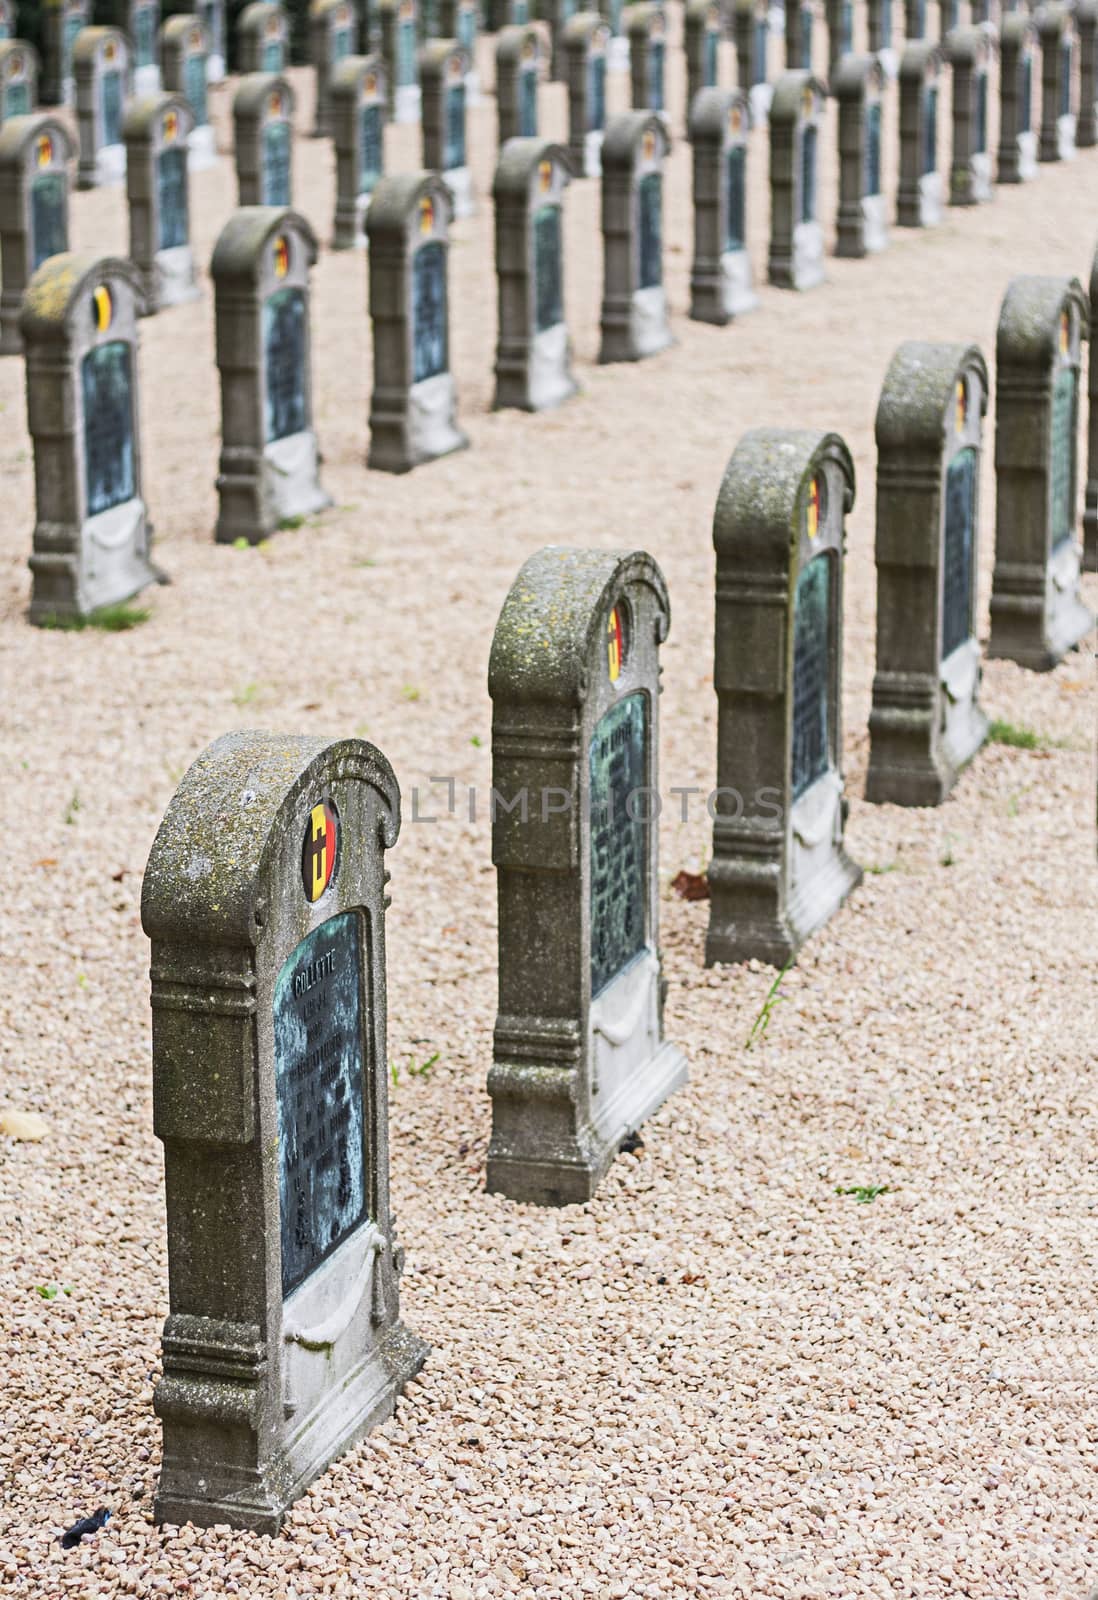 Belgian miitary cemetery

